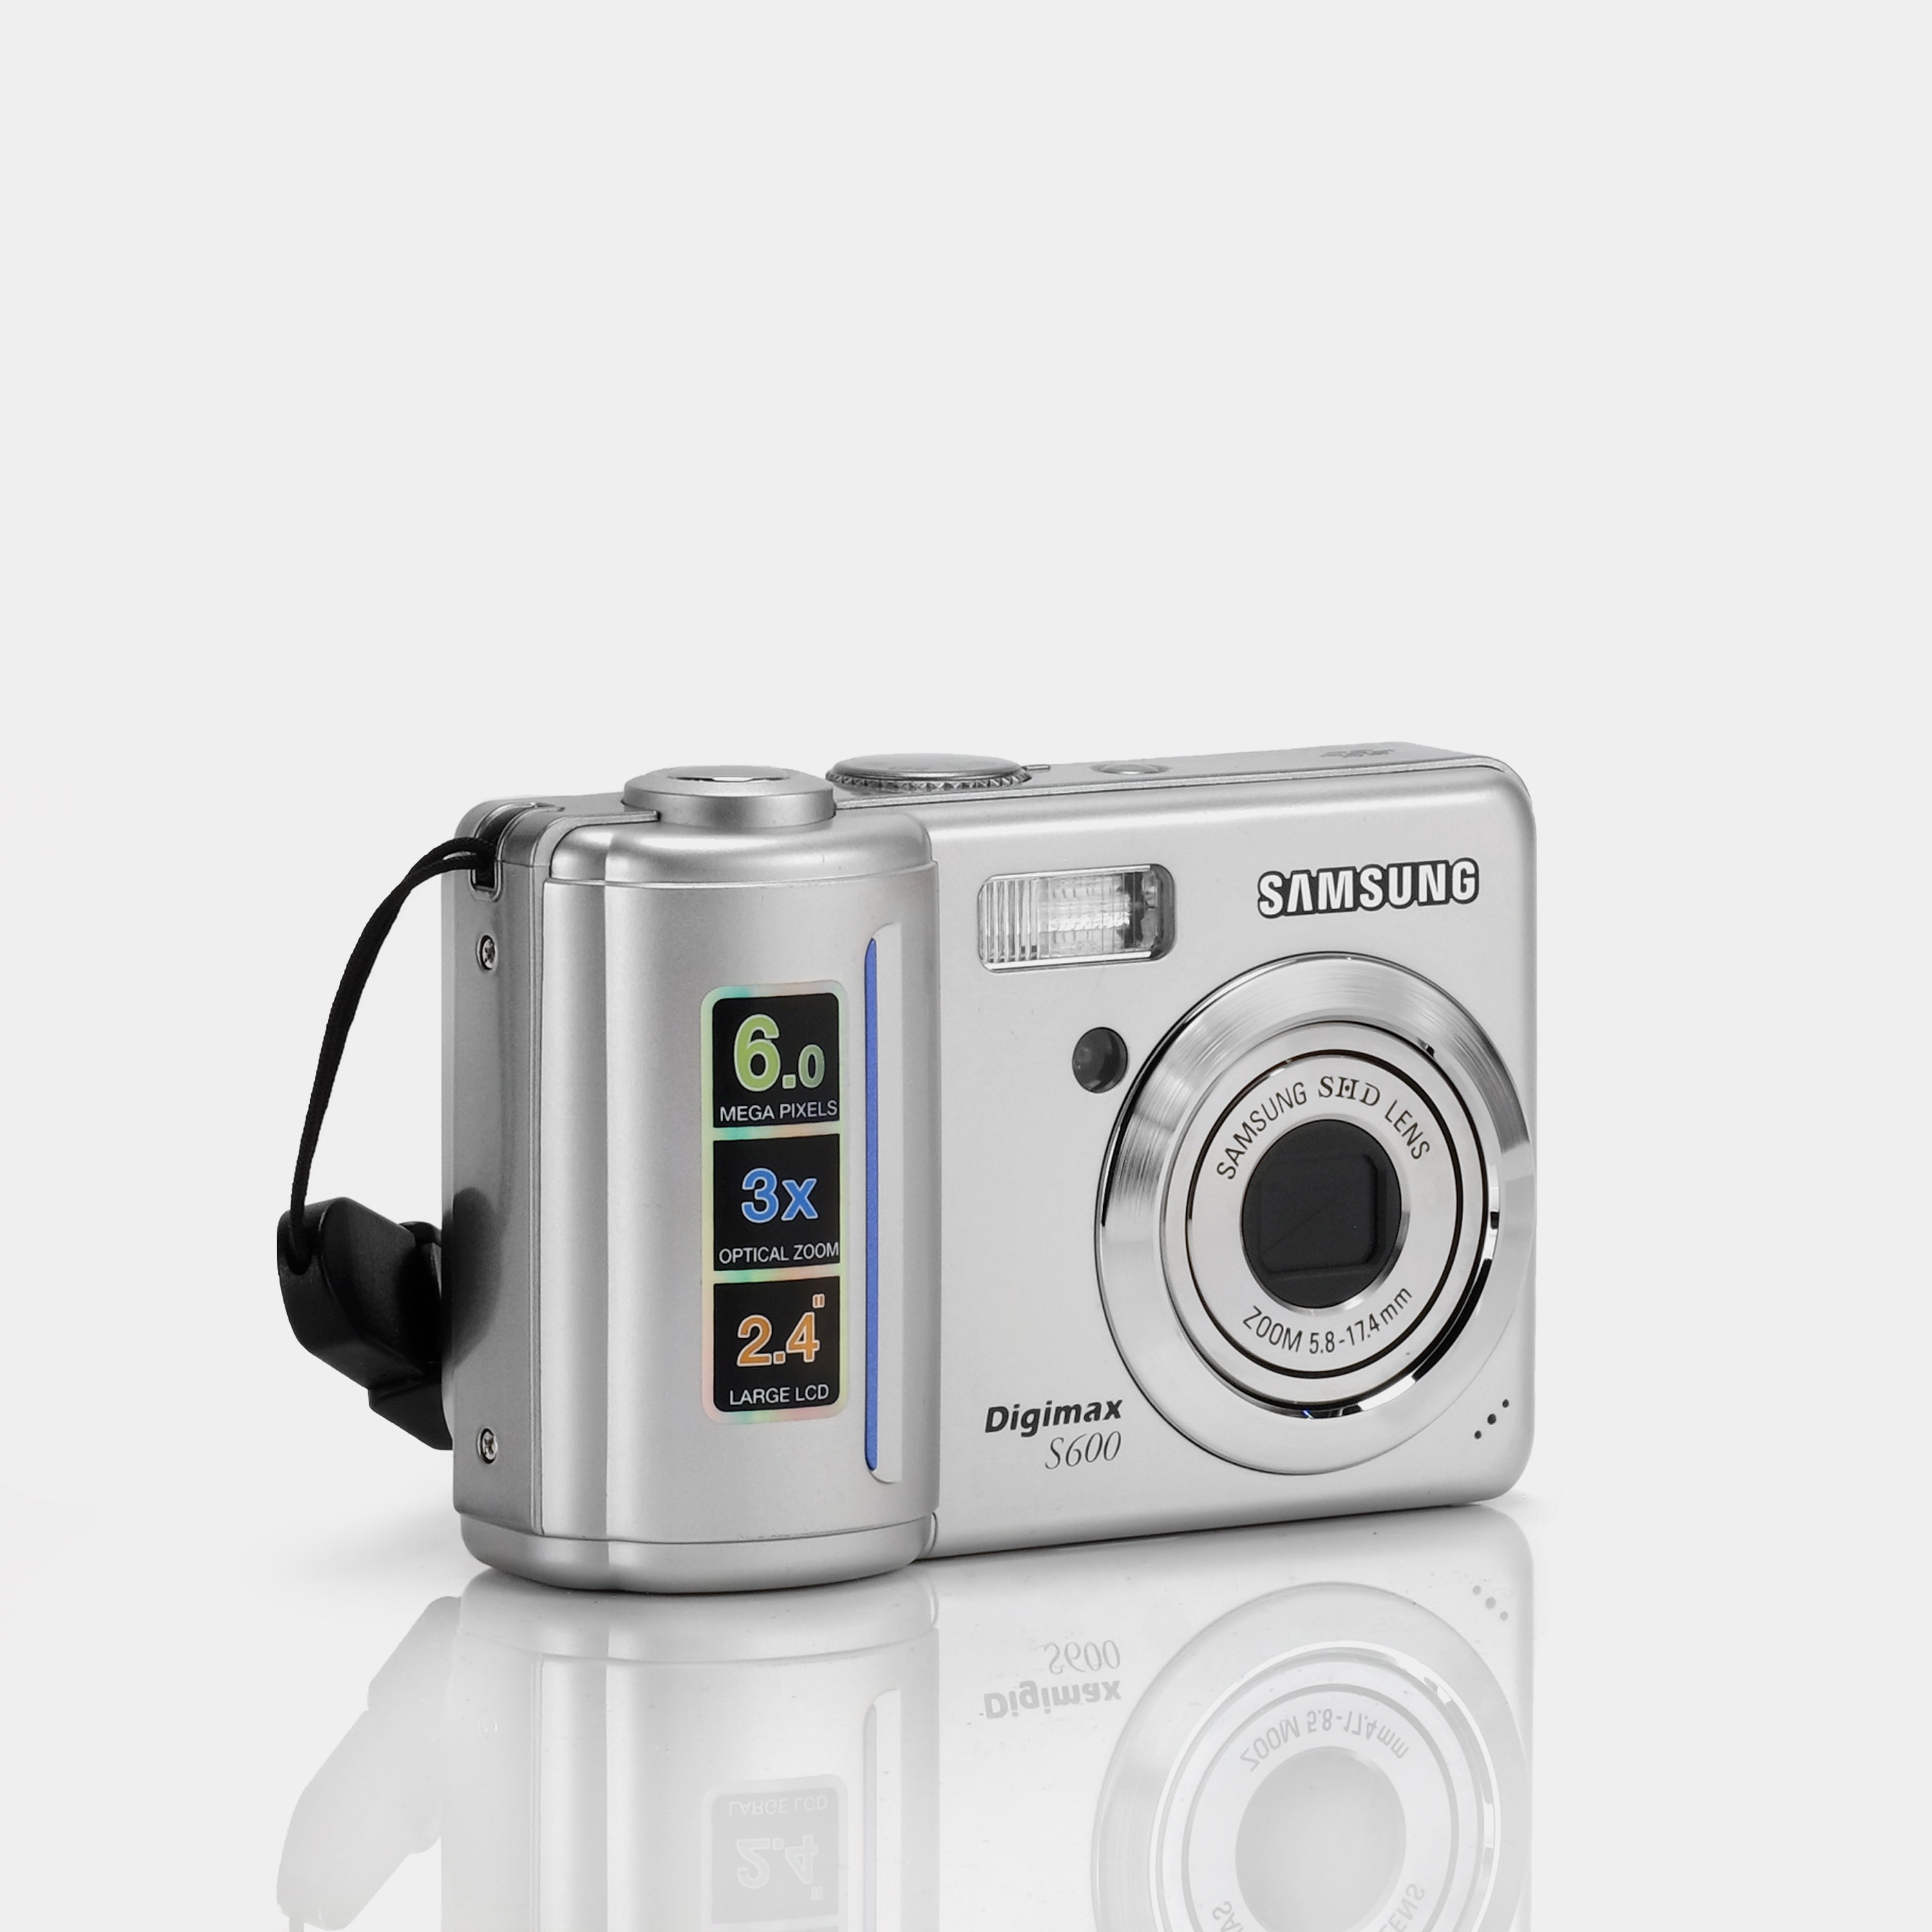 Samsung Digimax S600 Point and Shoot Digital Camera